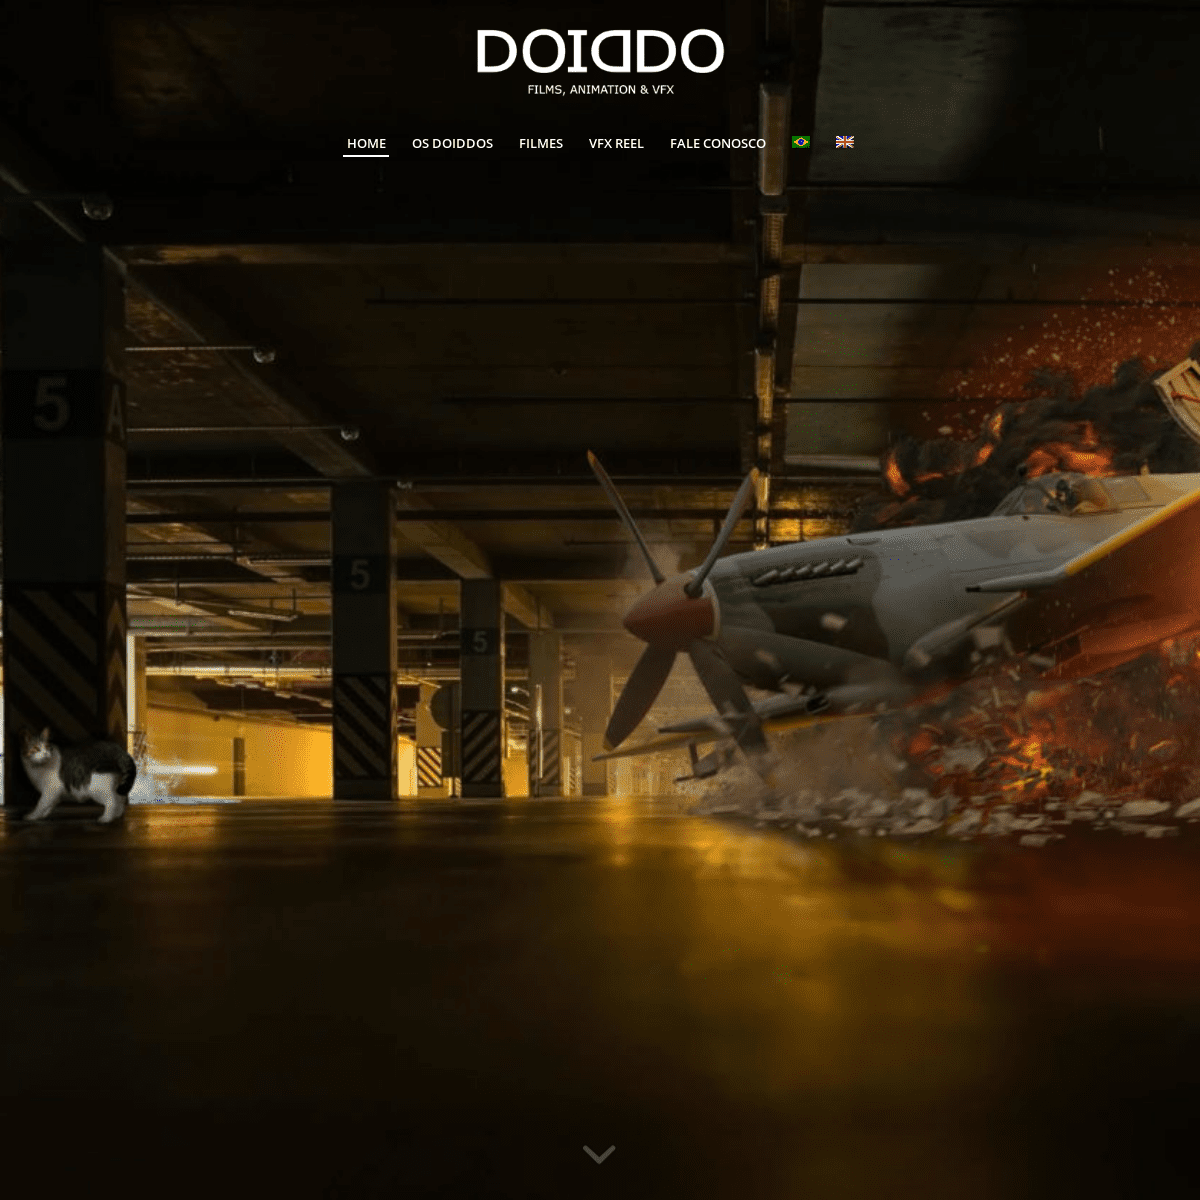 Doiddo Filmes – Films, animation & VFX